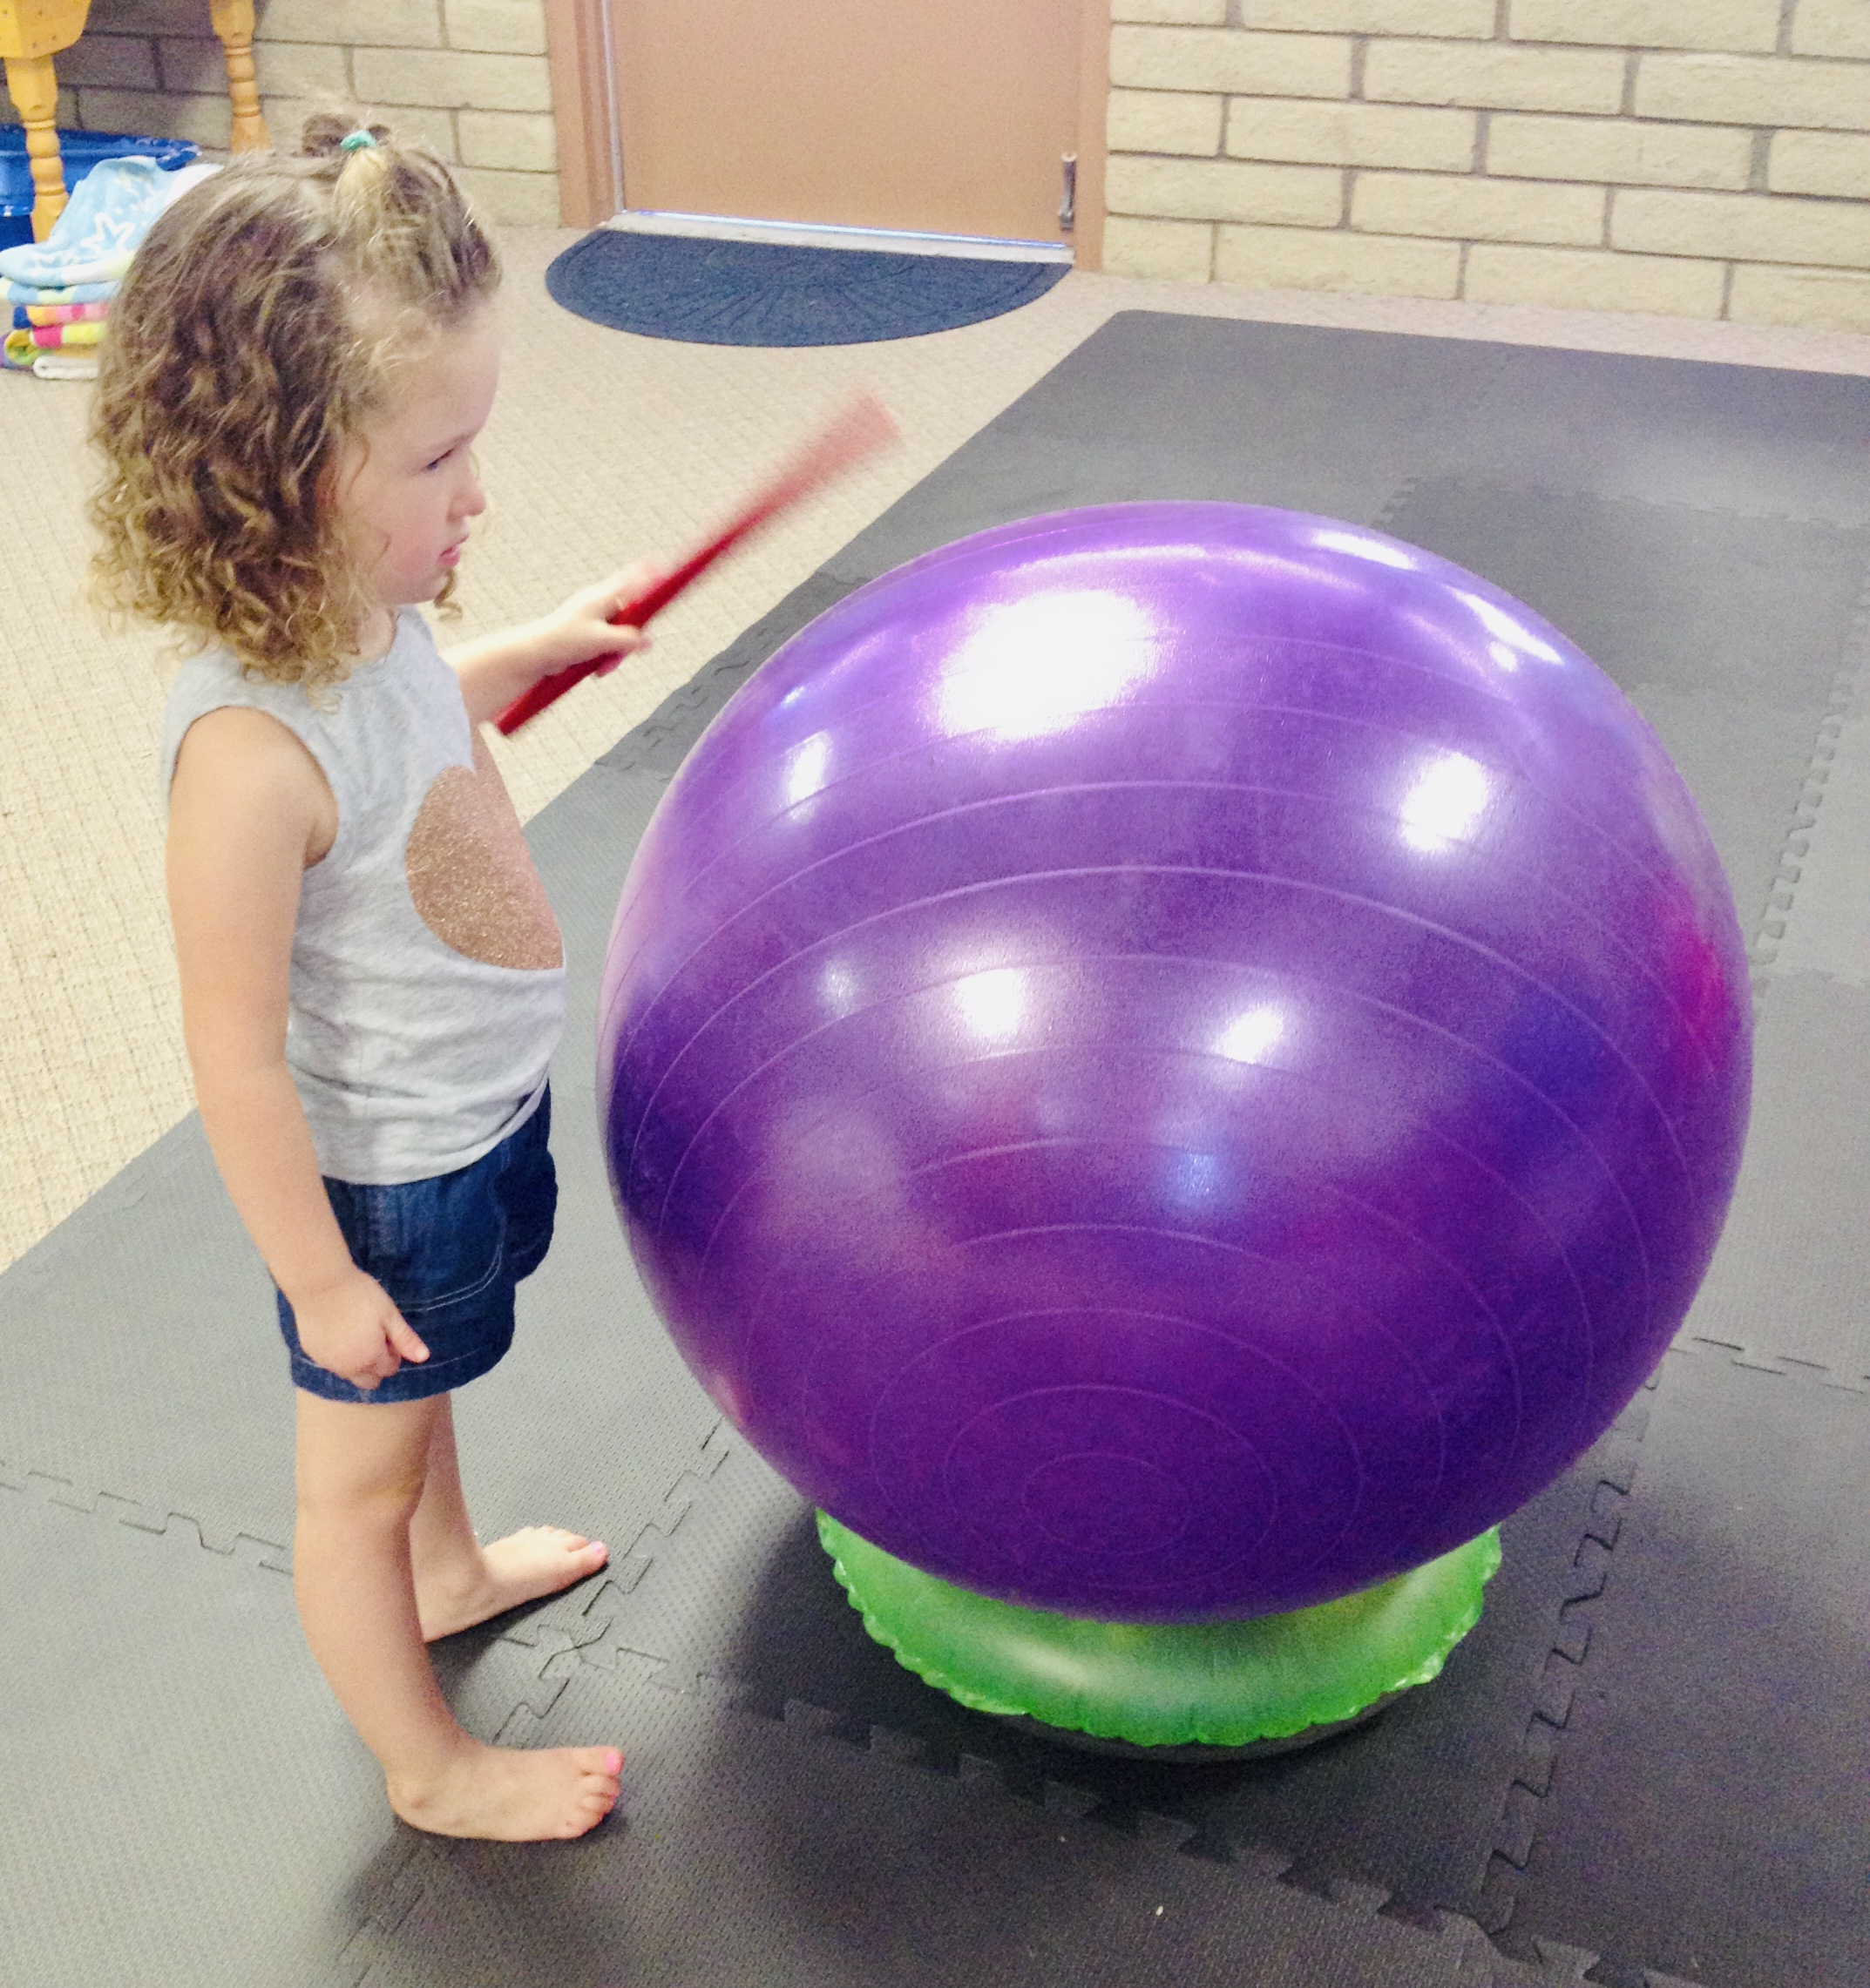 Little girl hitting drumstick on yoga ball